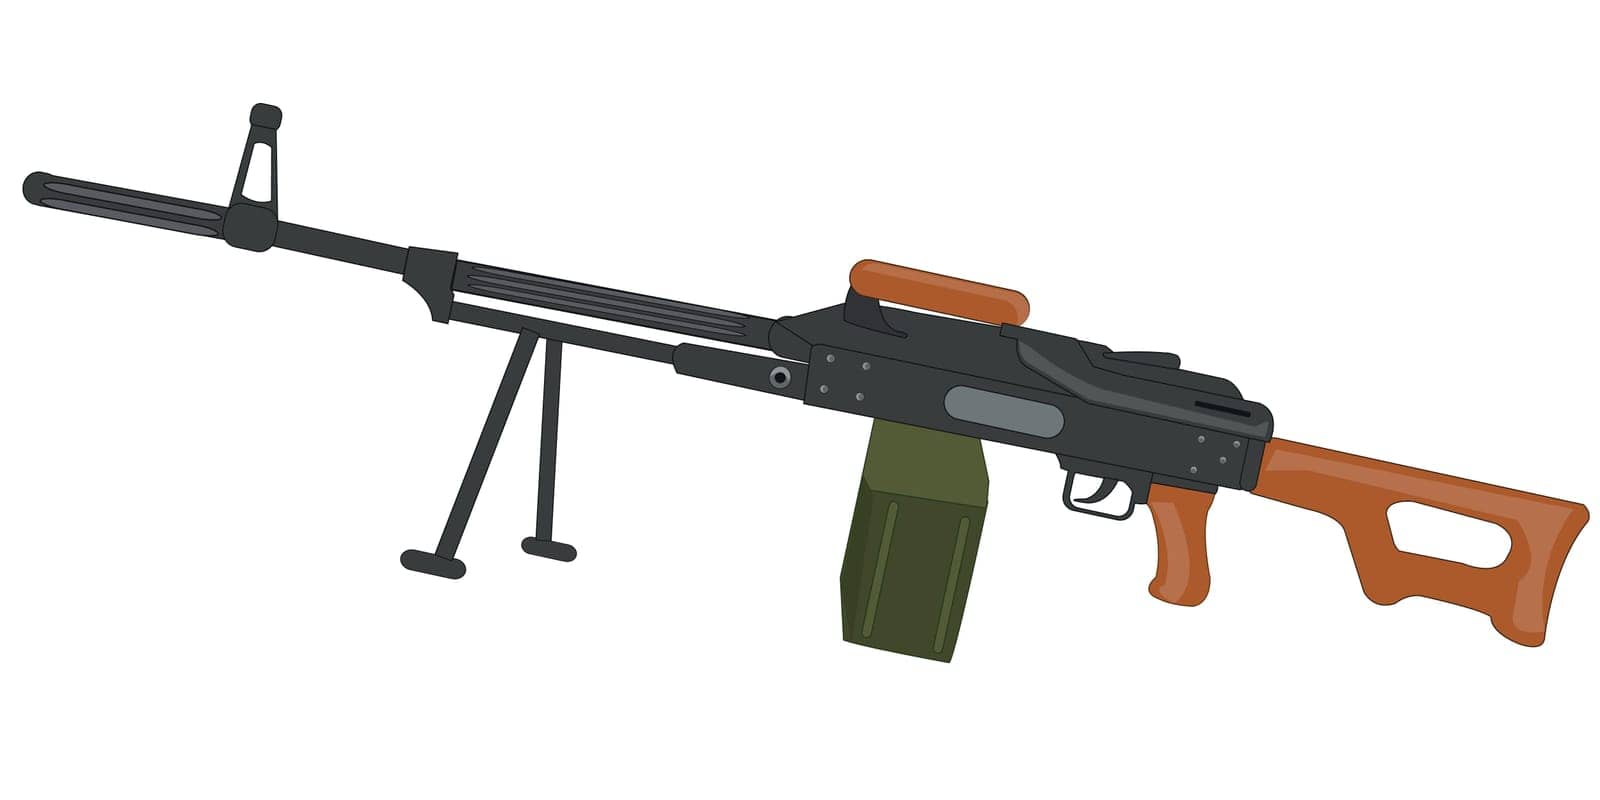 Small arms to armies Russia modern machine gun by cobol1964